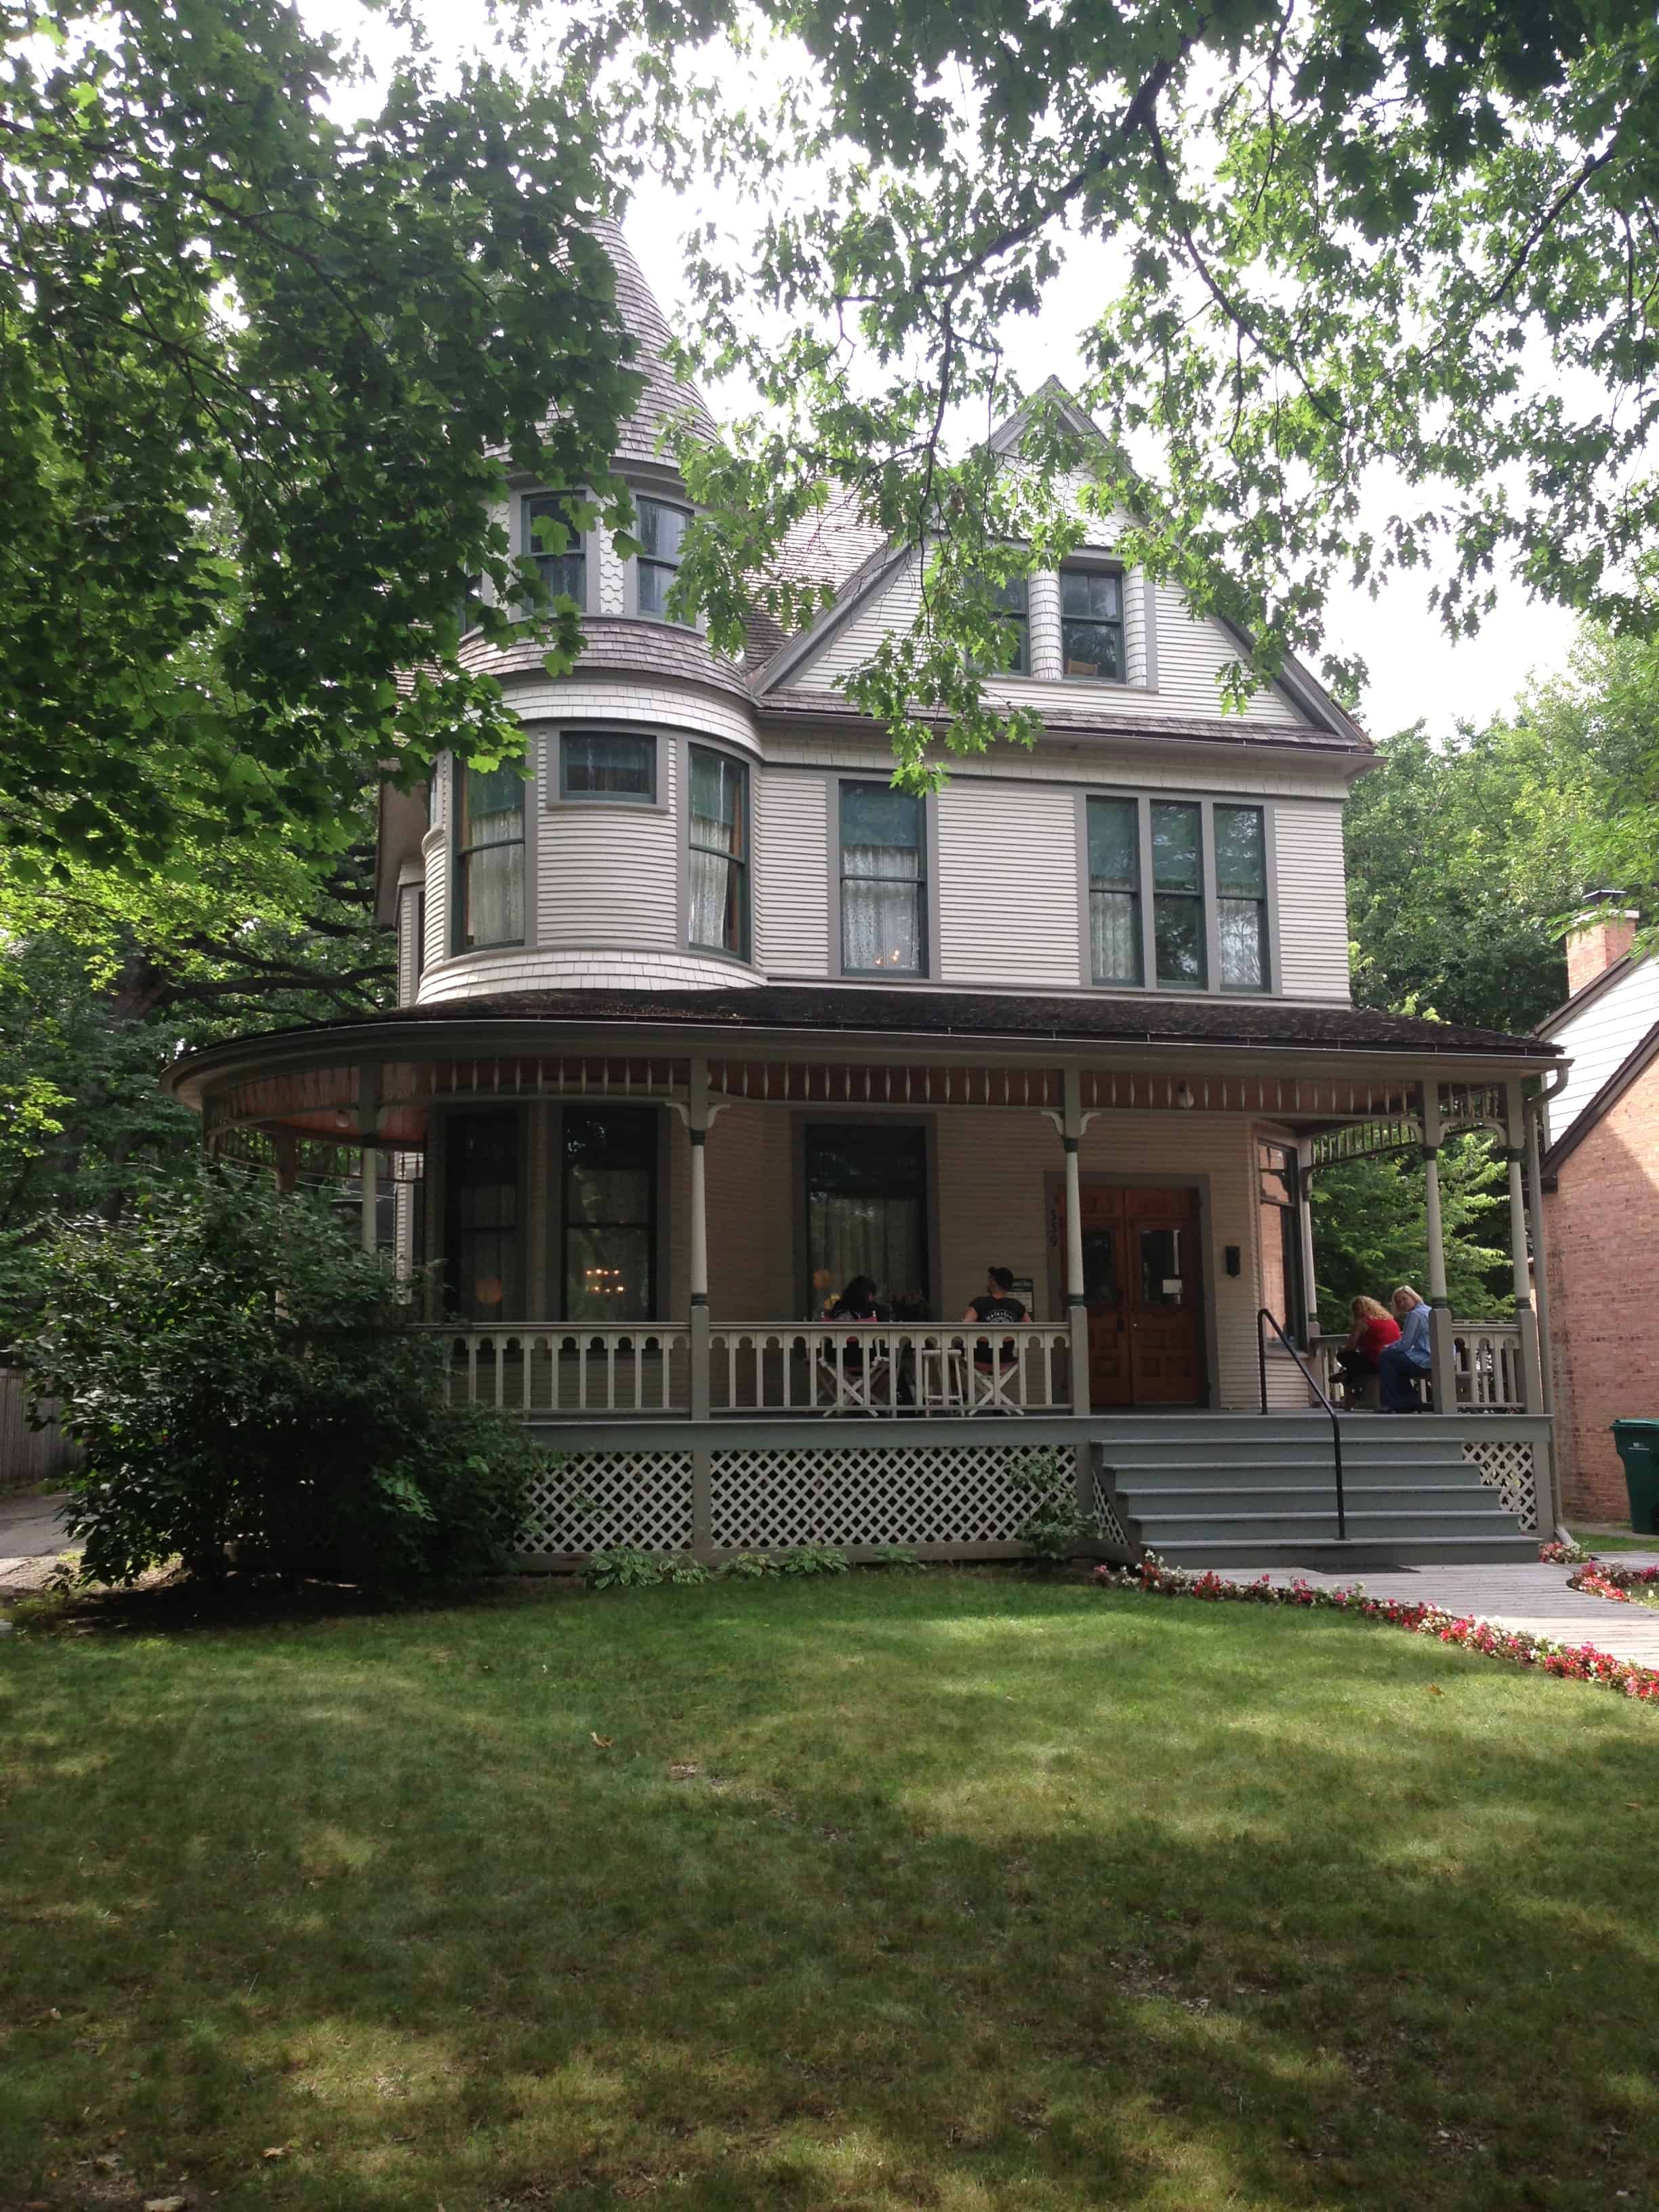 Ernest Hemingway Birthplace in Oak Park, Illinois